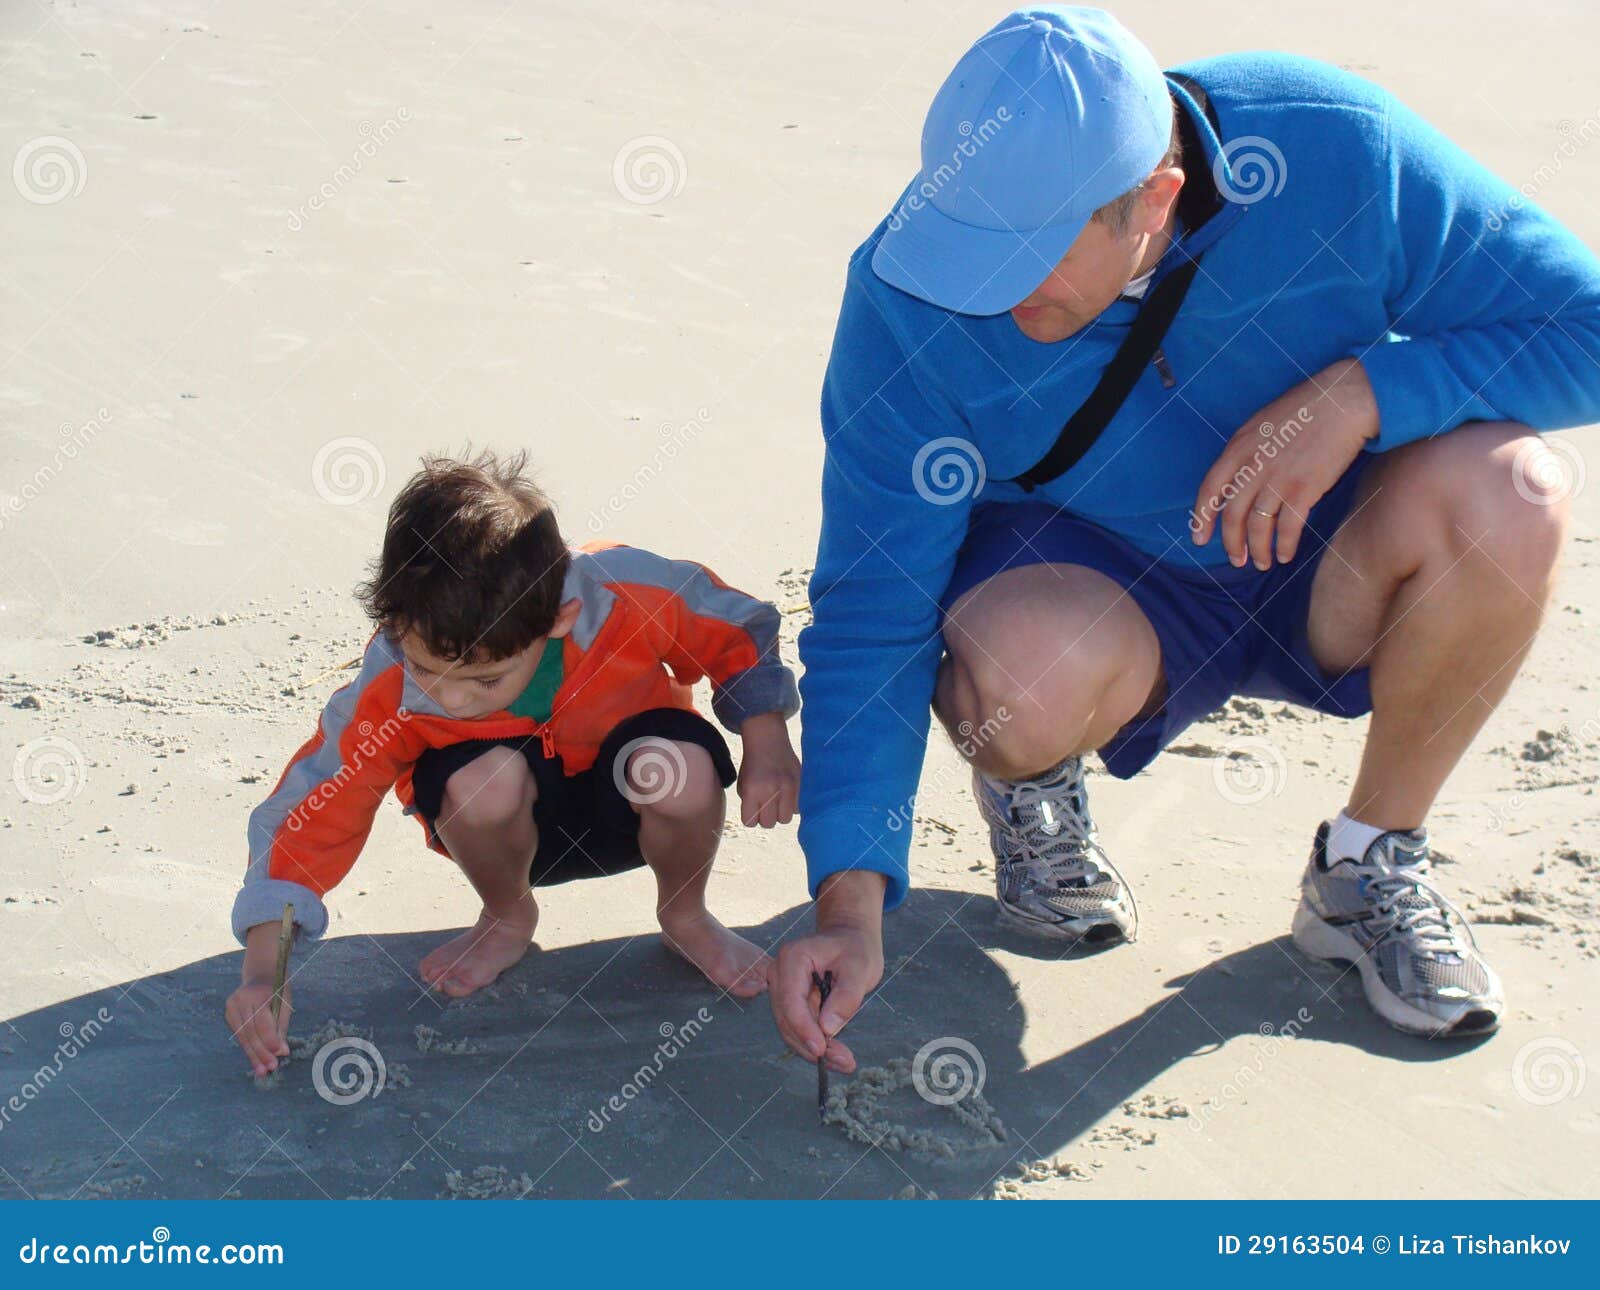 father teaching his son to write